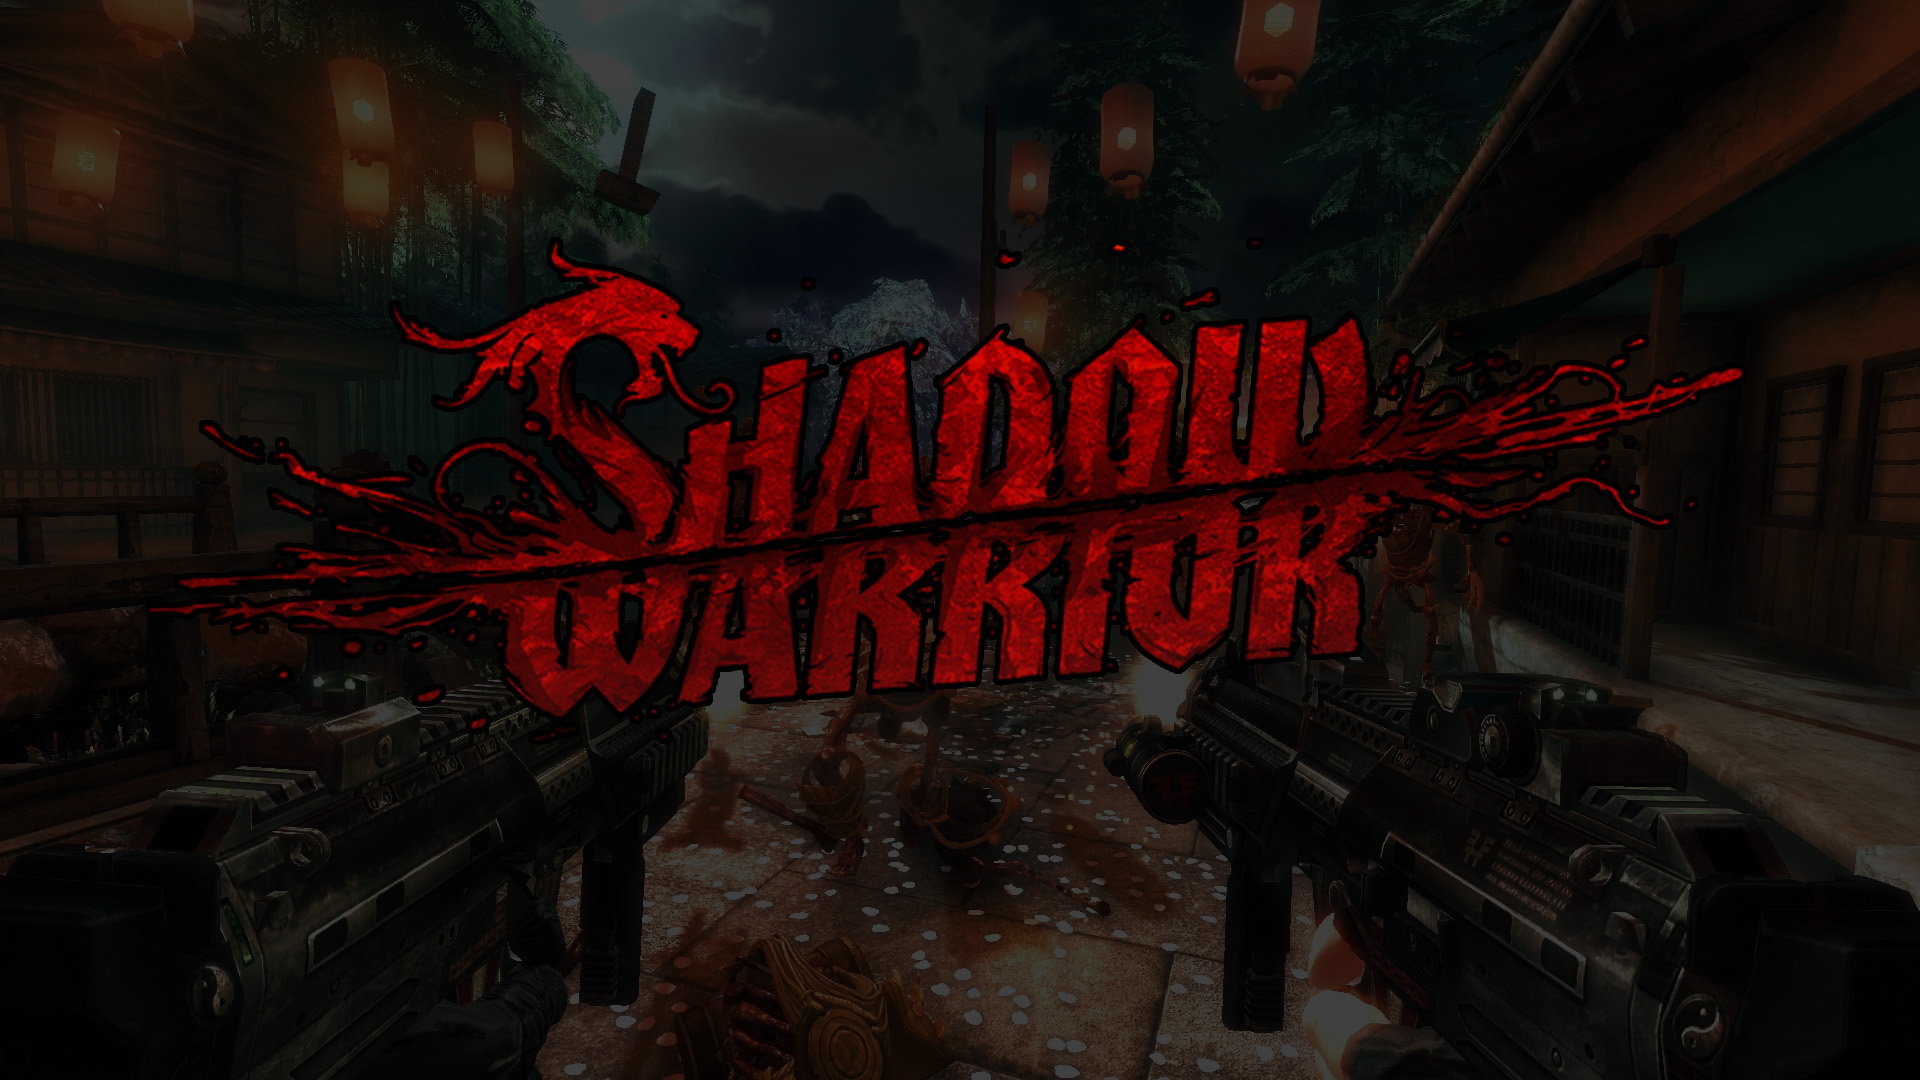 download free shadow 2 warrior